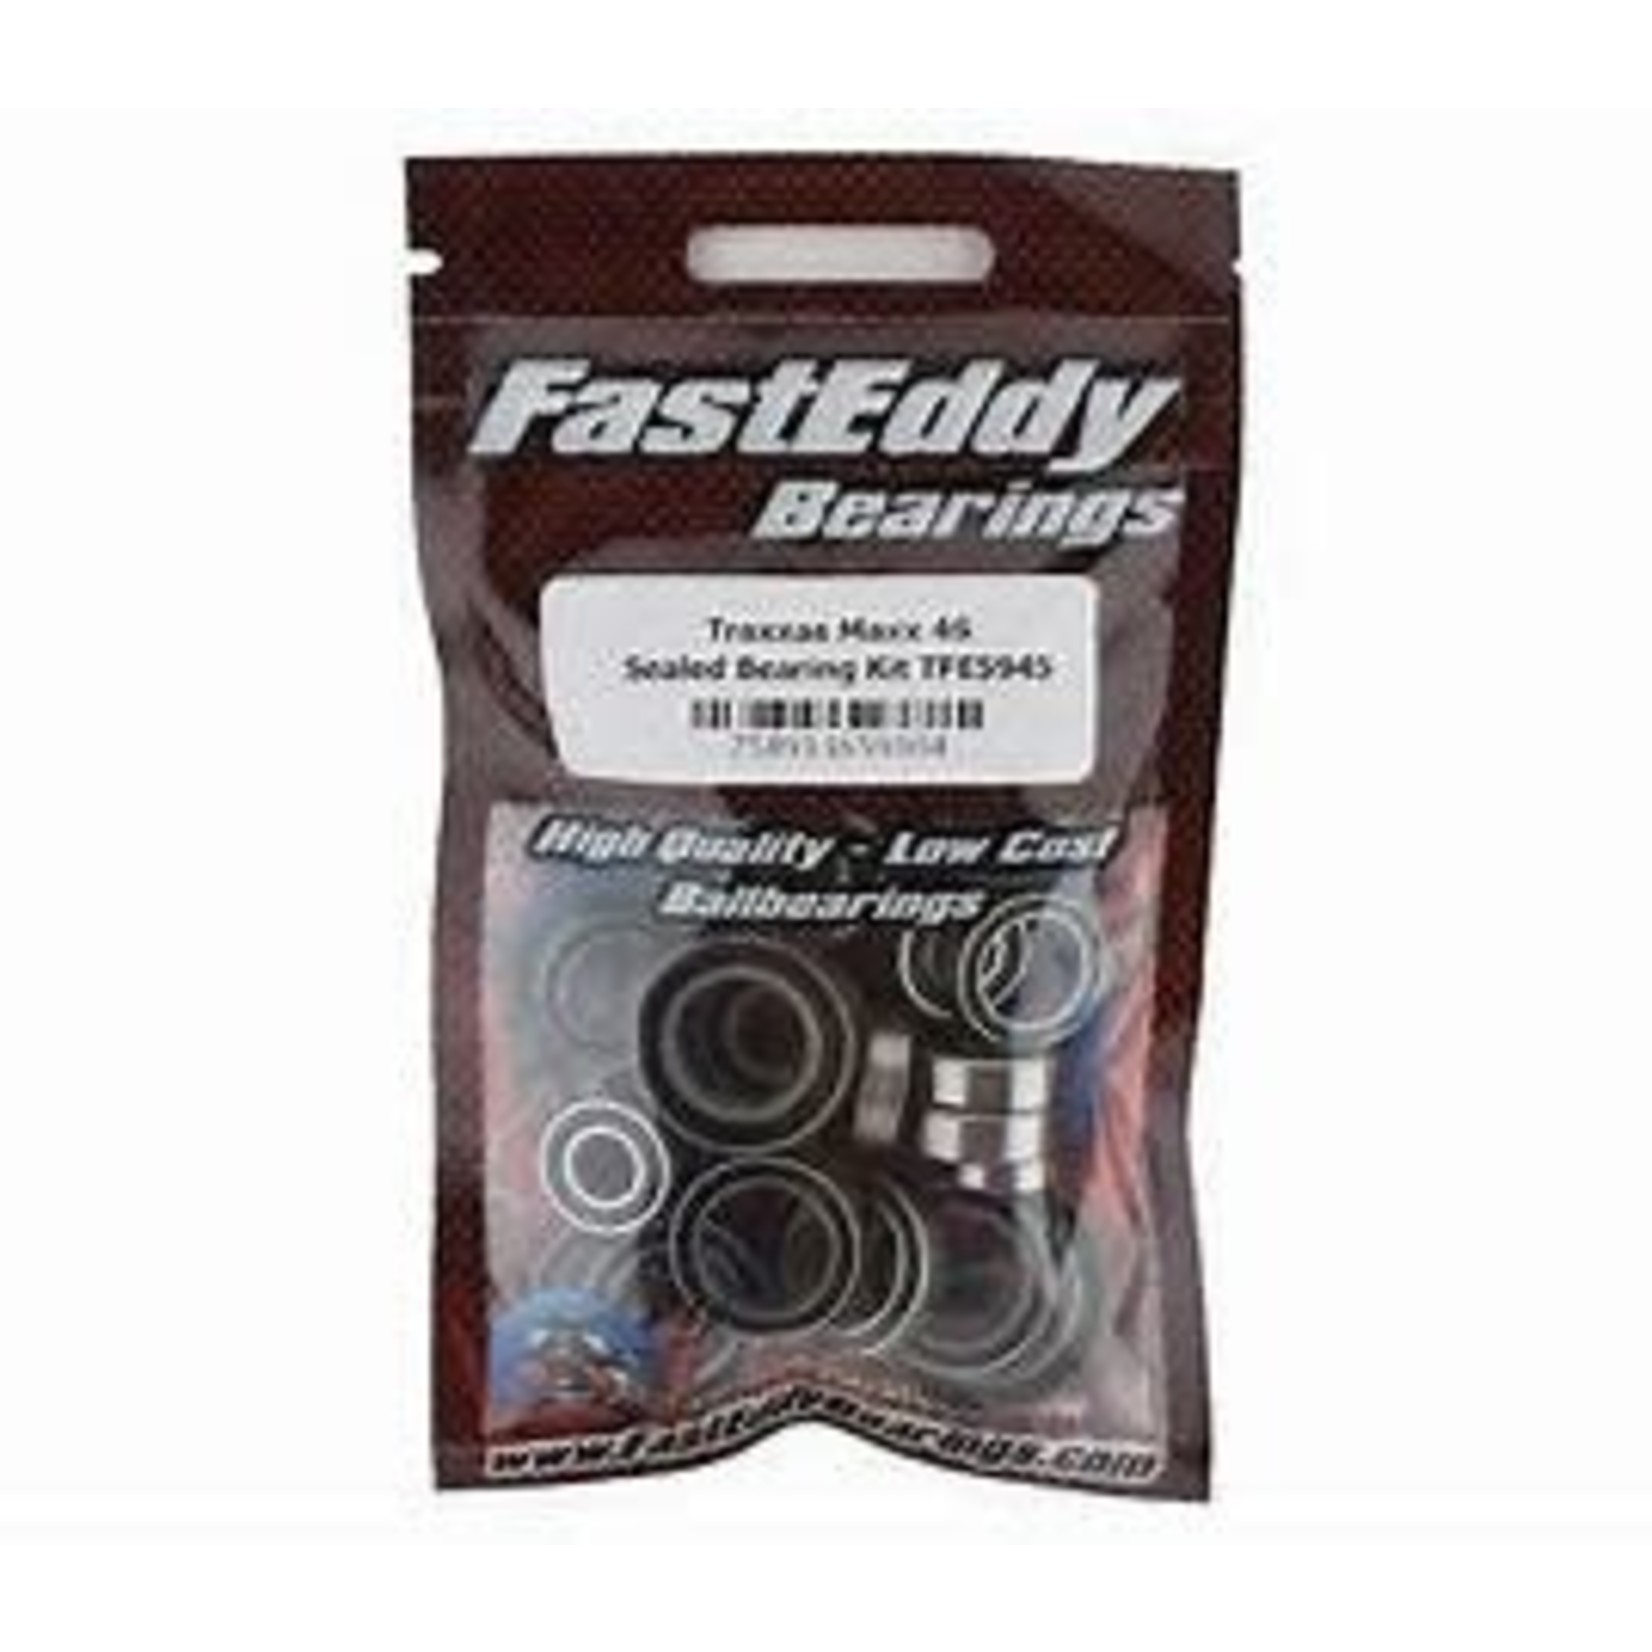 Fast Eddy FastEddy Traxxas Maxx 4S Bearing Kit